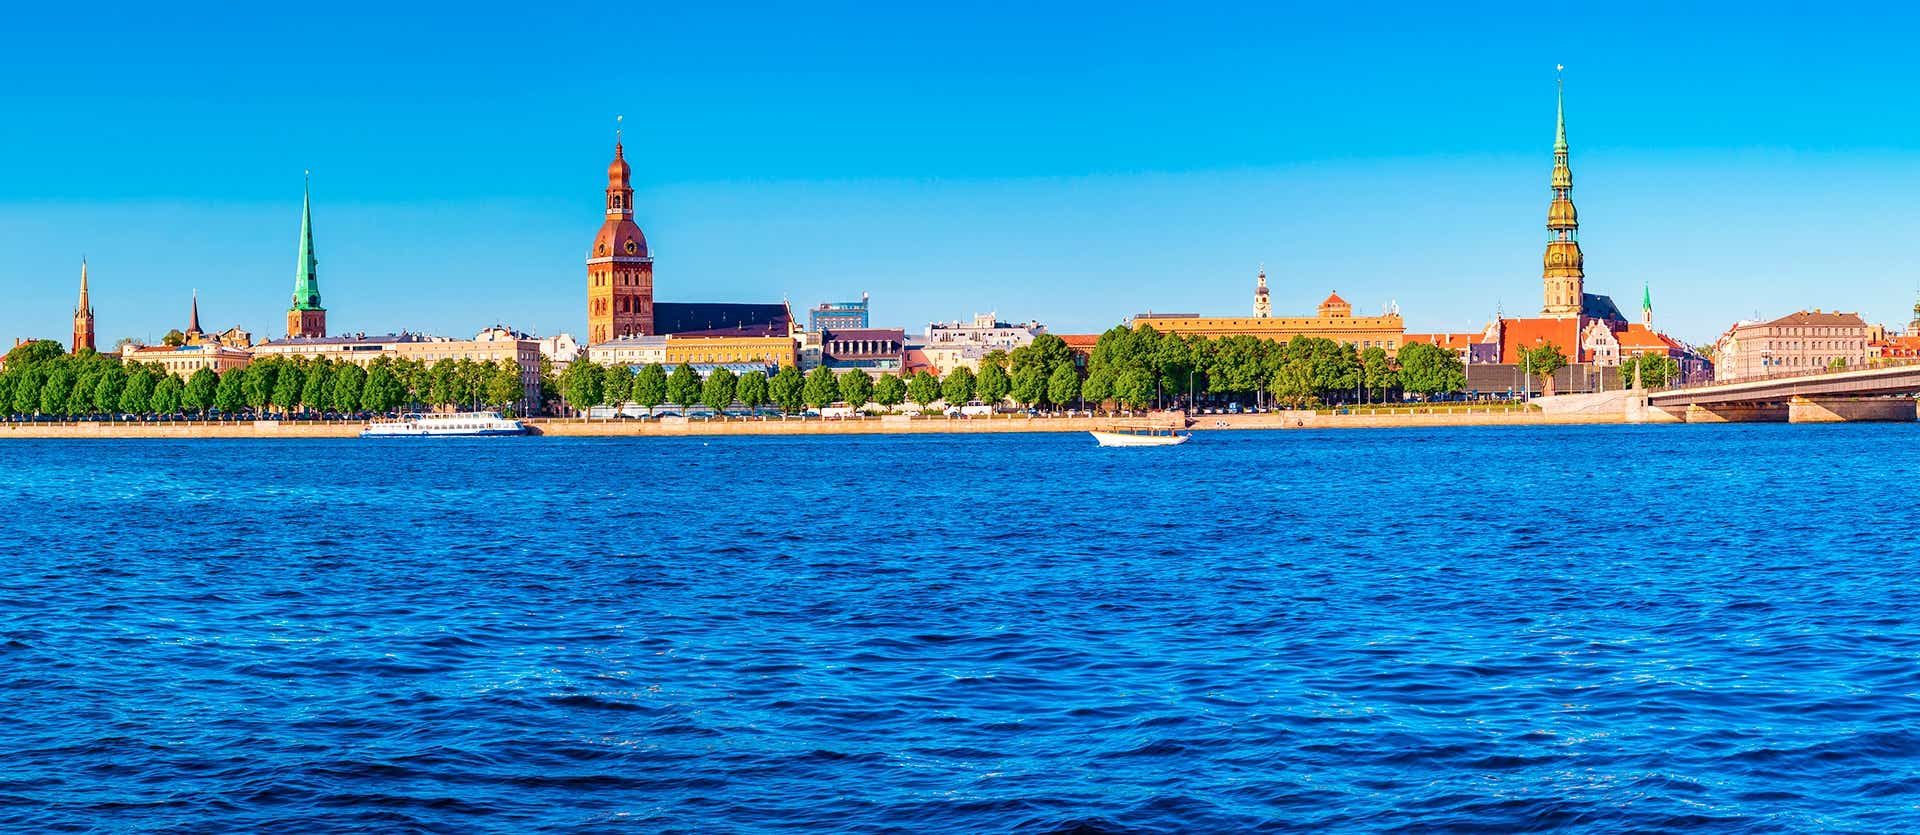 Daugava River Embankment <span class="iconos separador"></span> Riga <span class="iconos separador"></span> Latvia